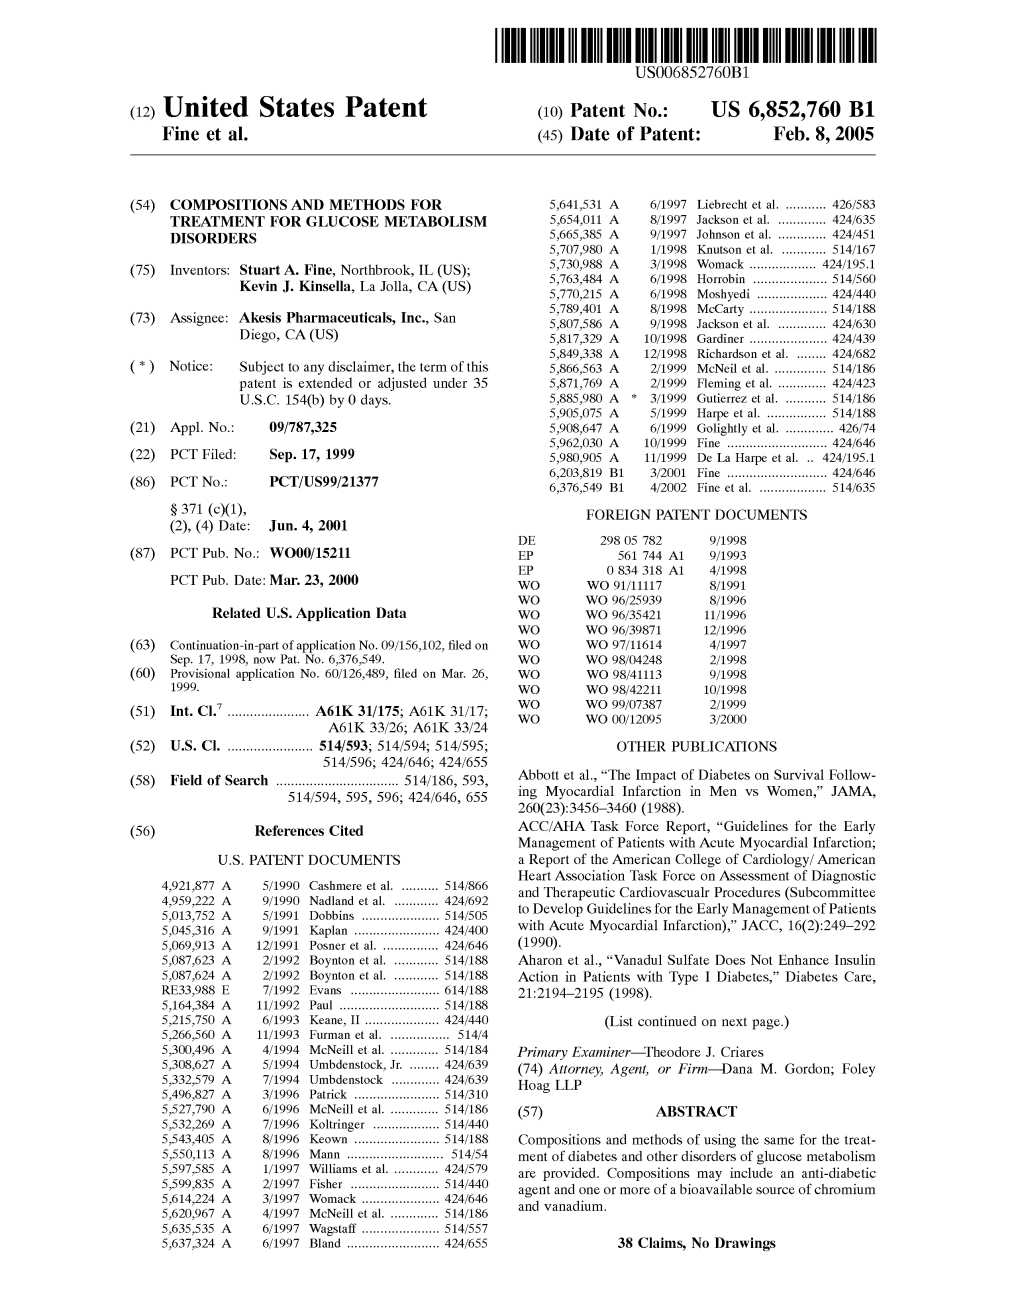 (12) United States Patent (10) Patent No.: US 6,852,760 B1 Fine Et Al